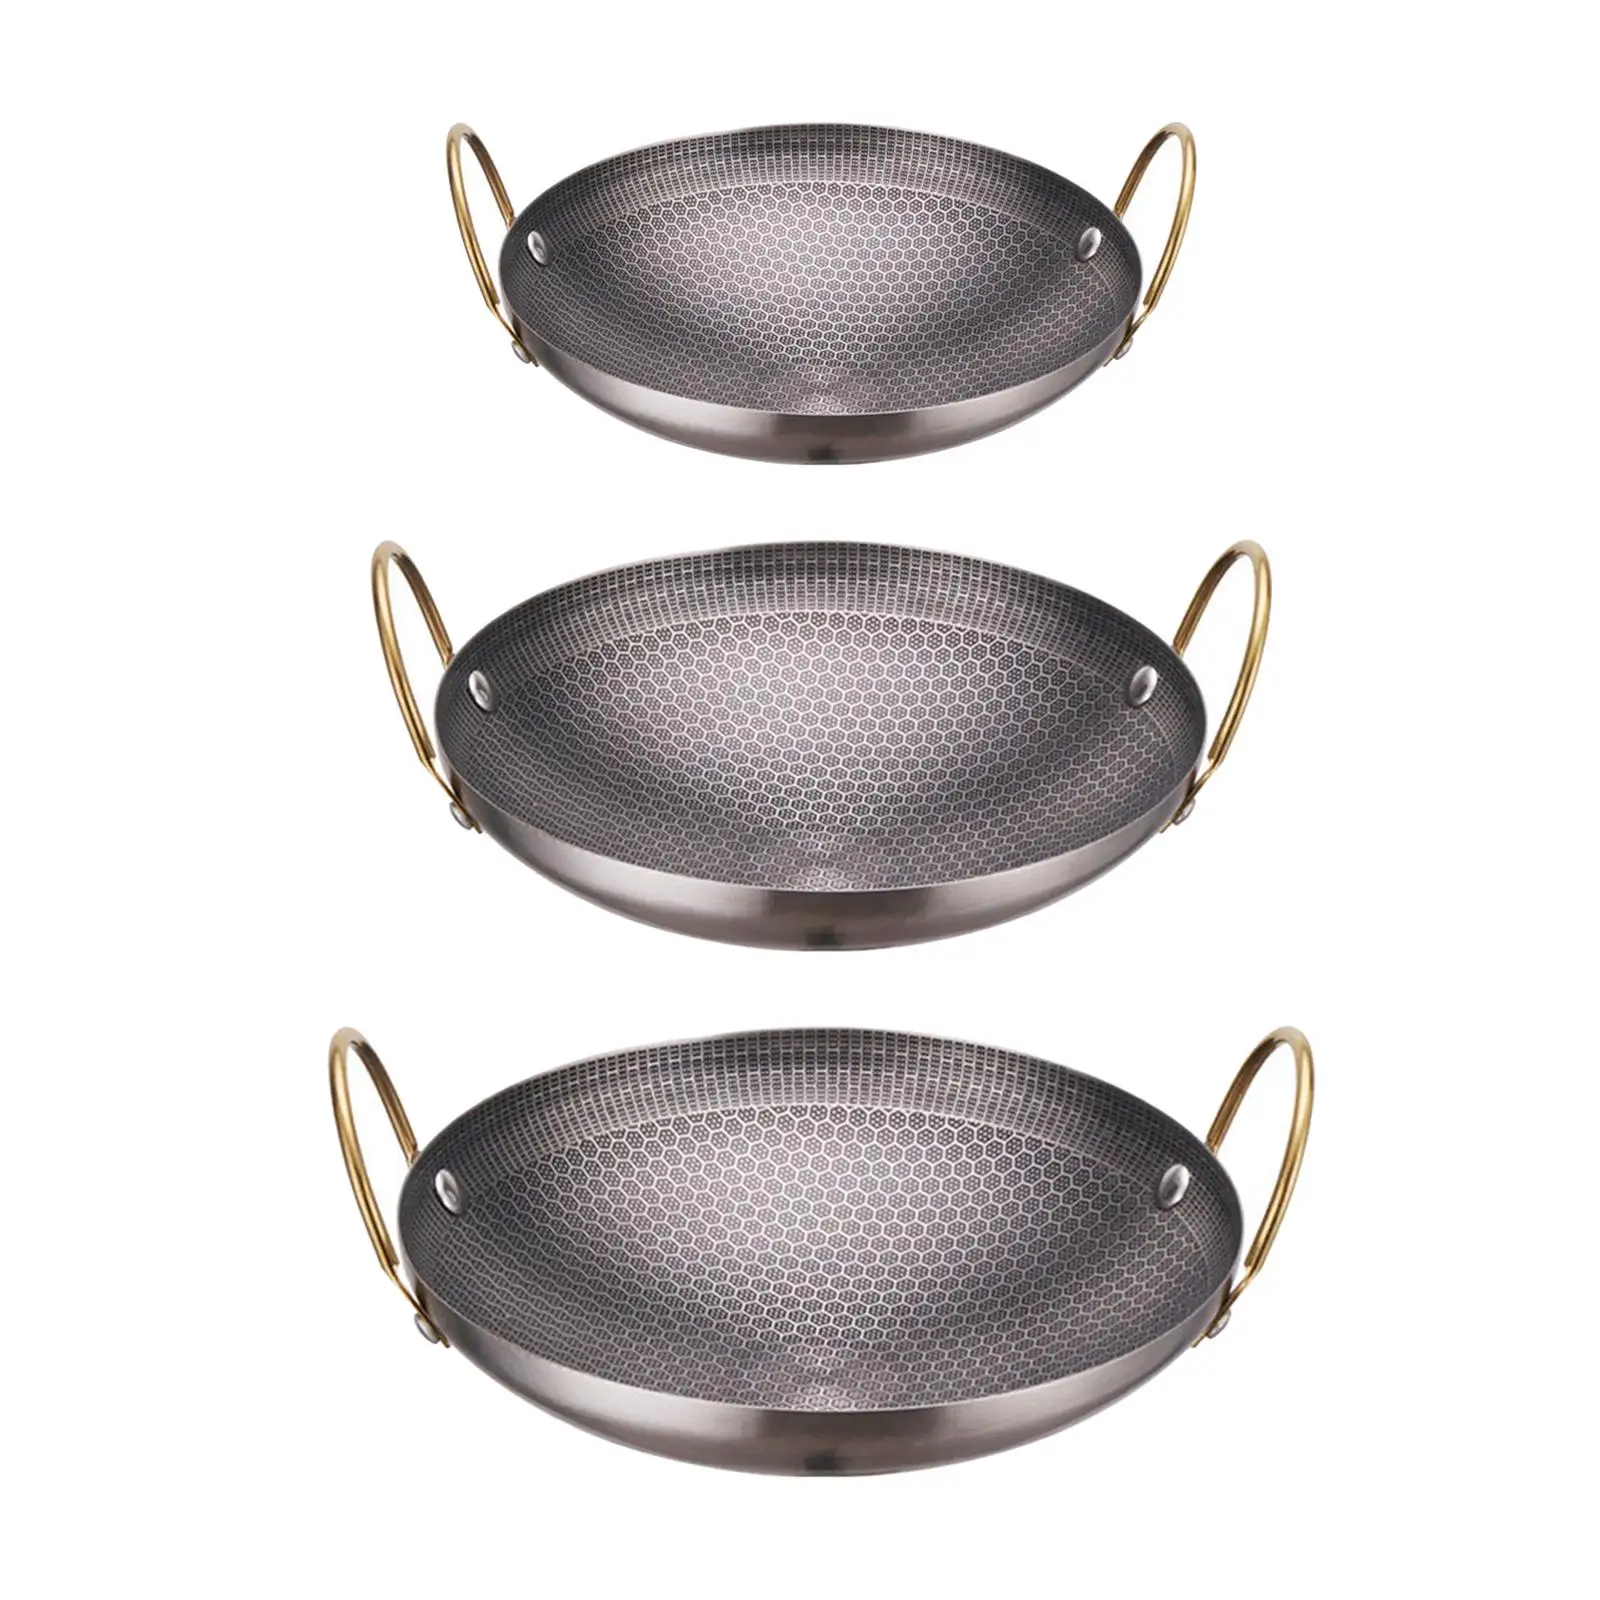 Honeycomb Textured Stainless Steel Wok Pot Kitchenware Stewpot Frying Pan Saute Pan Durable Saucepan for Outdoor Picnic Camping